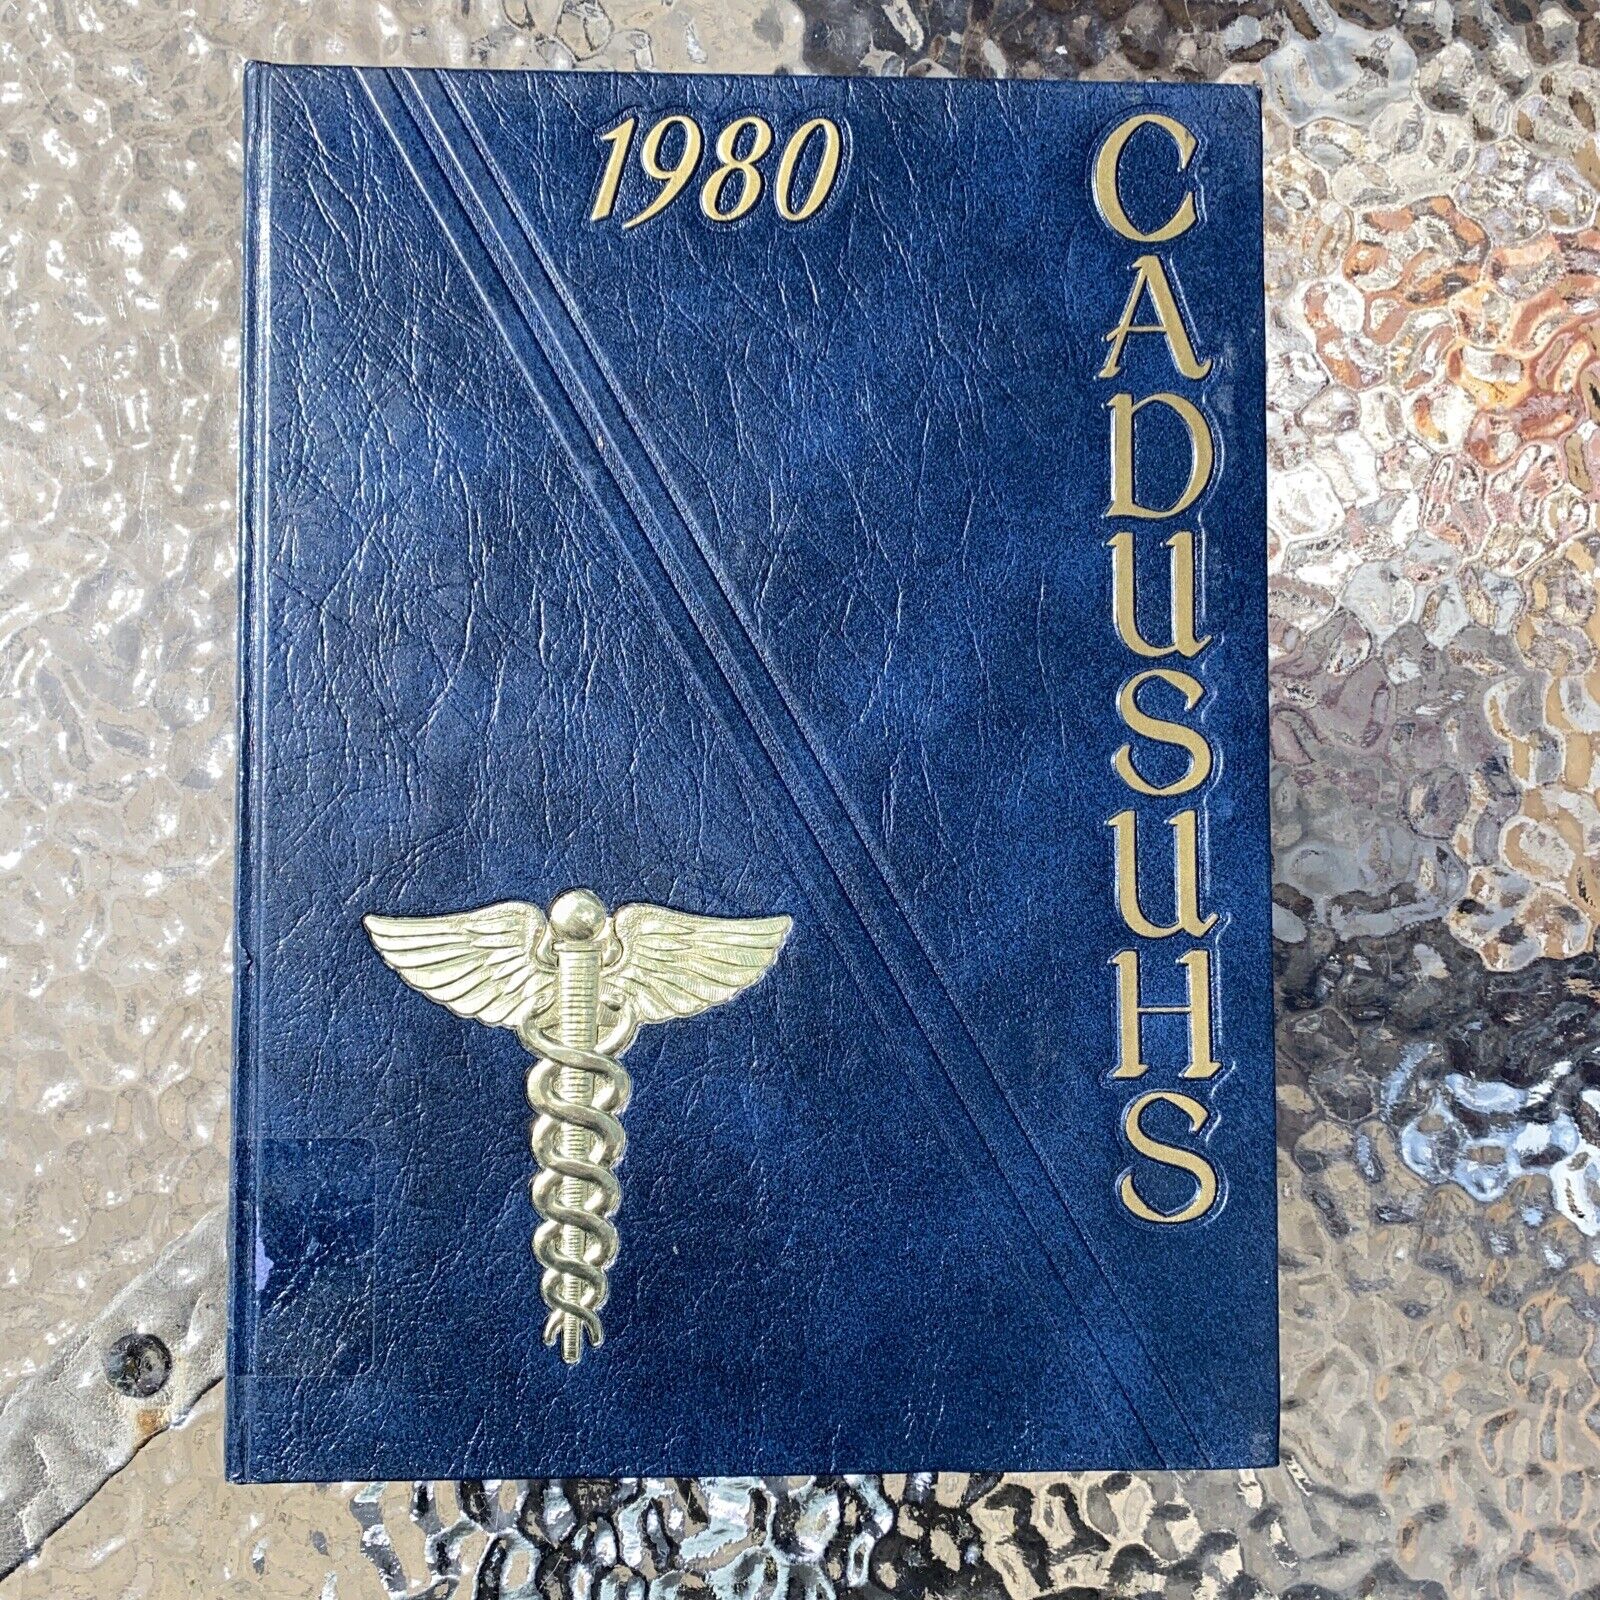 Yearbook Uniformed Services University Of Health Sciences CADUSUHS 1980